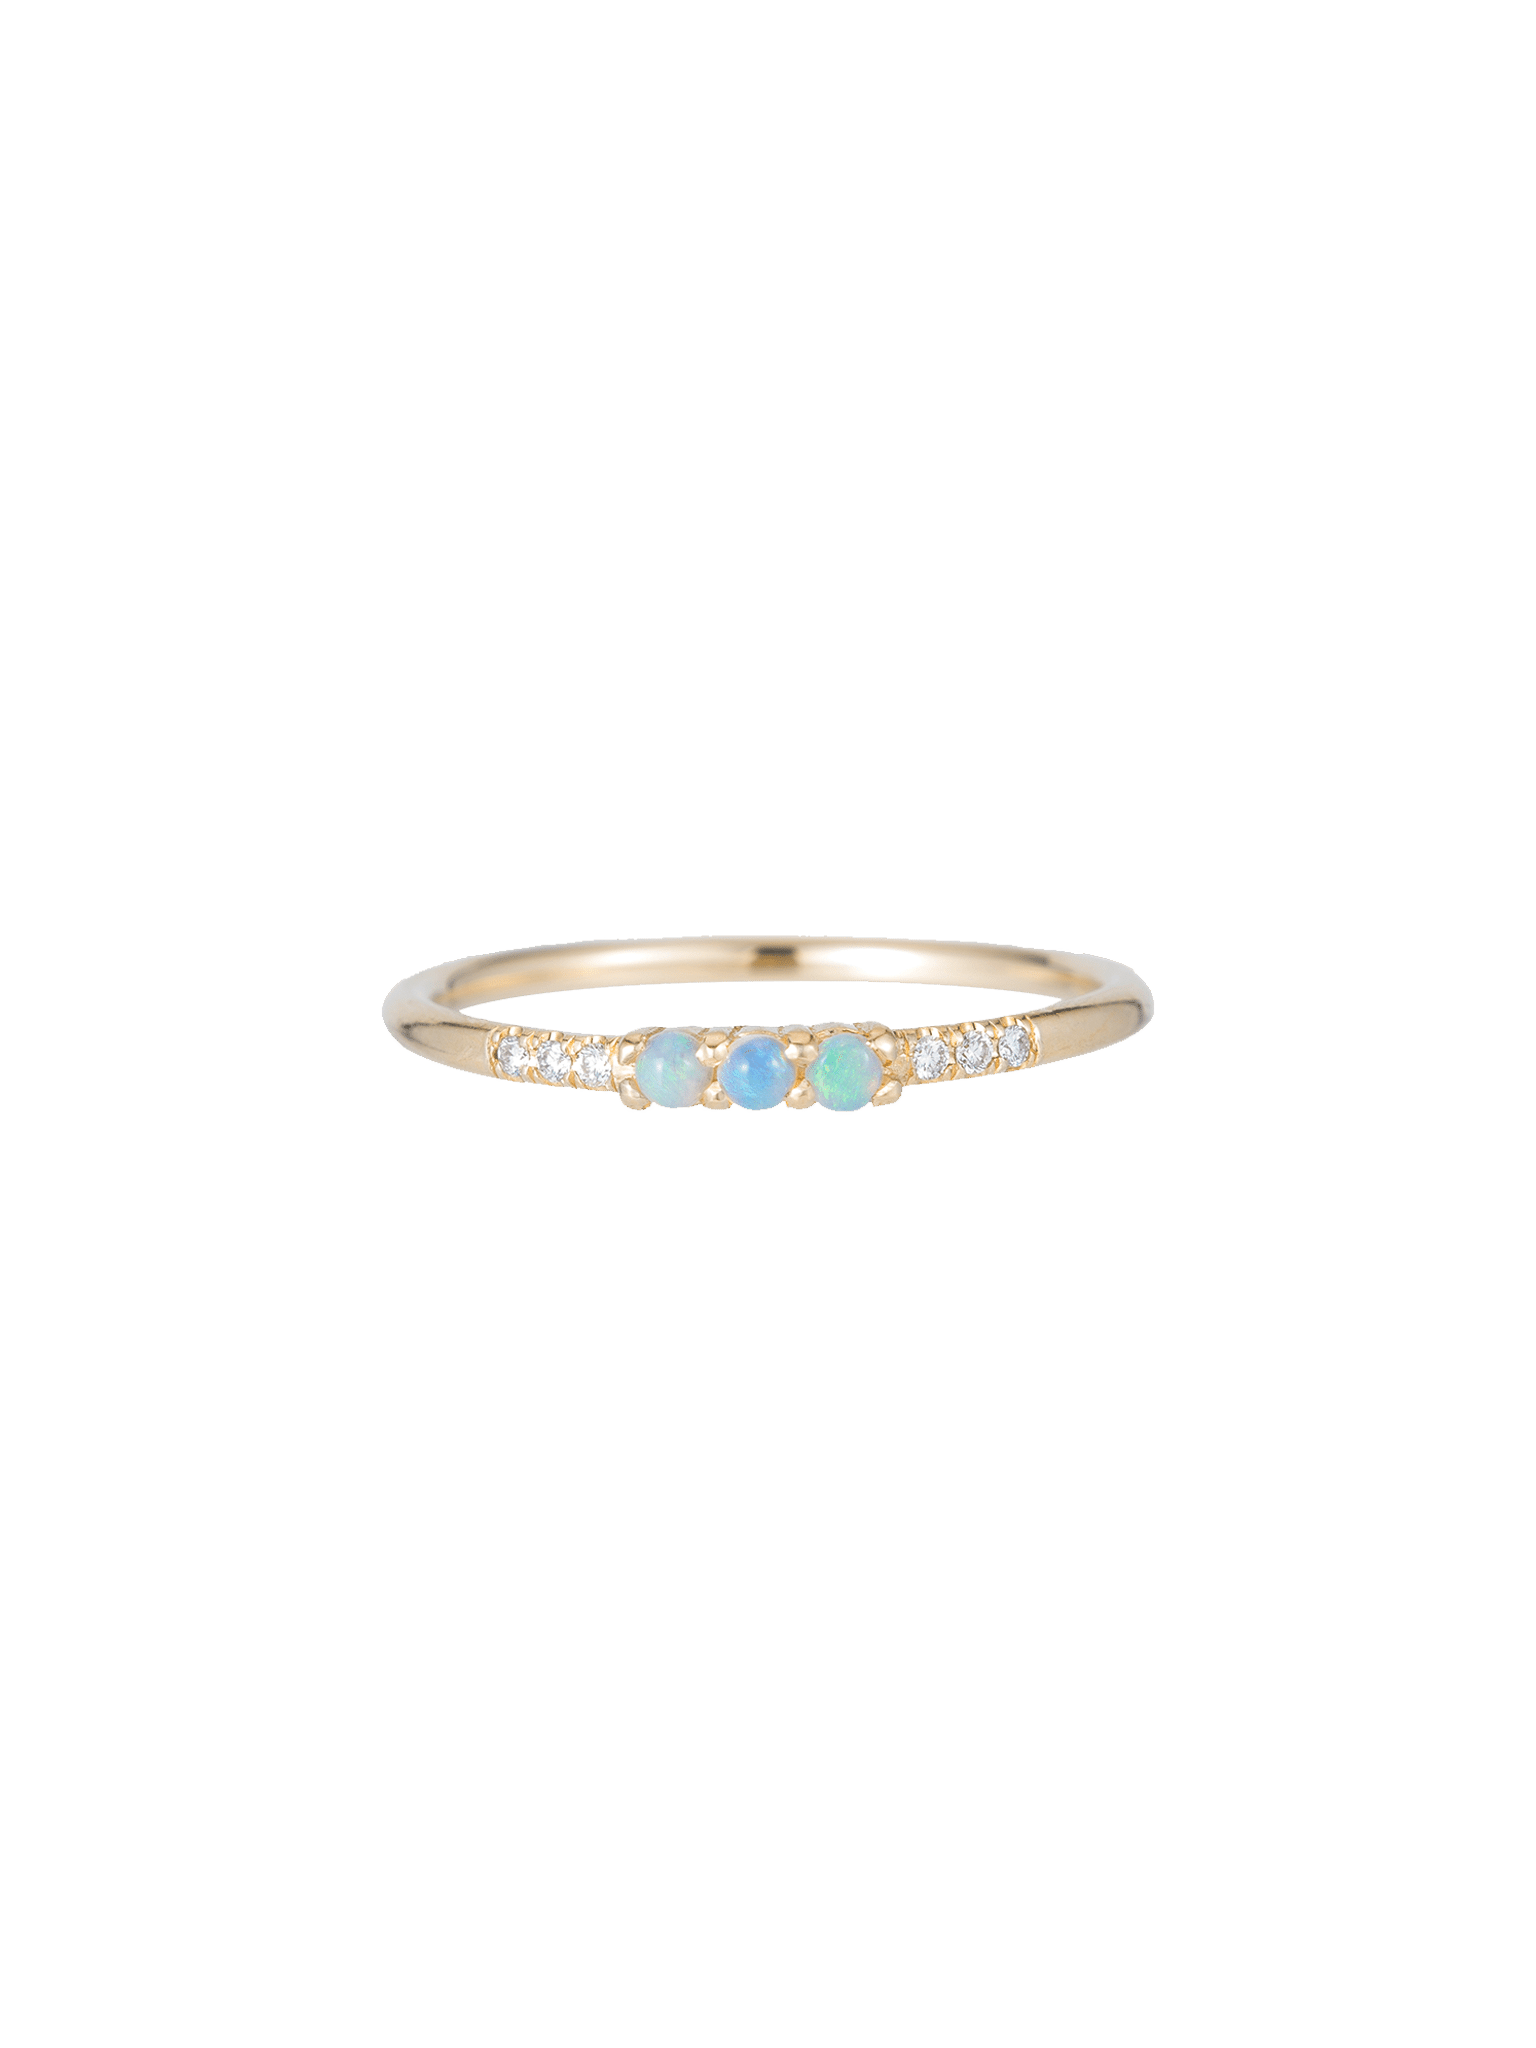 Three opal equilibrium ring